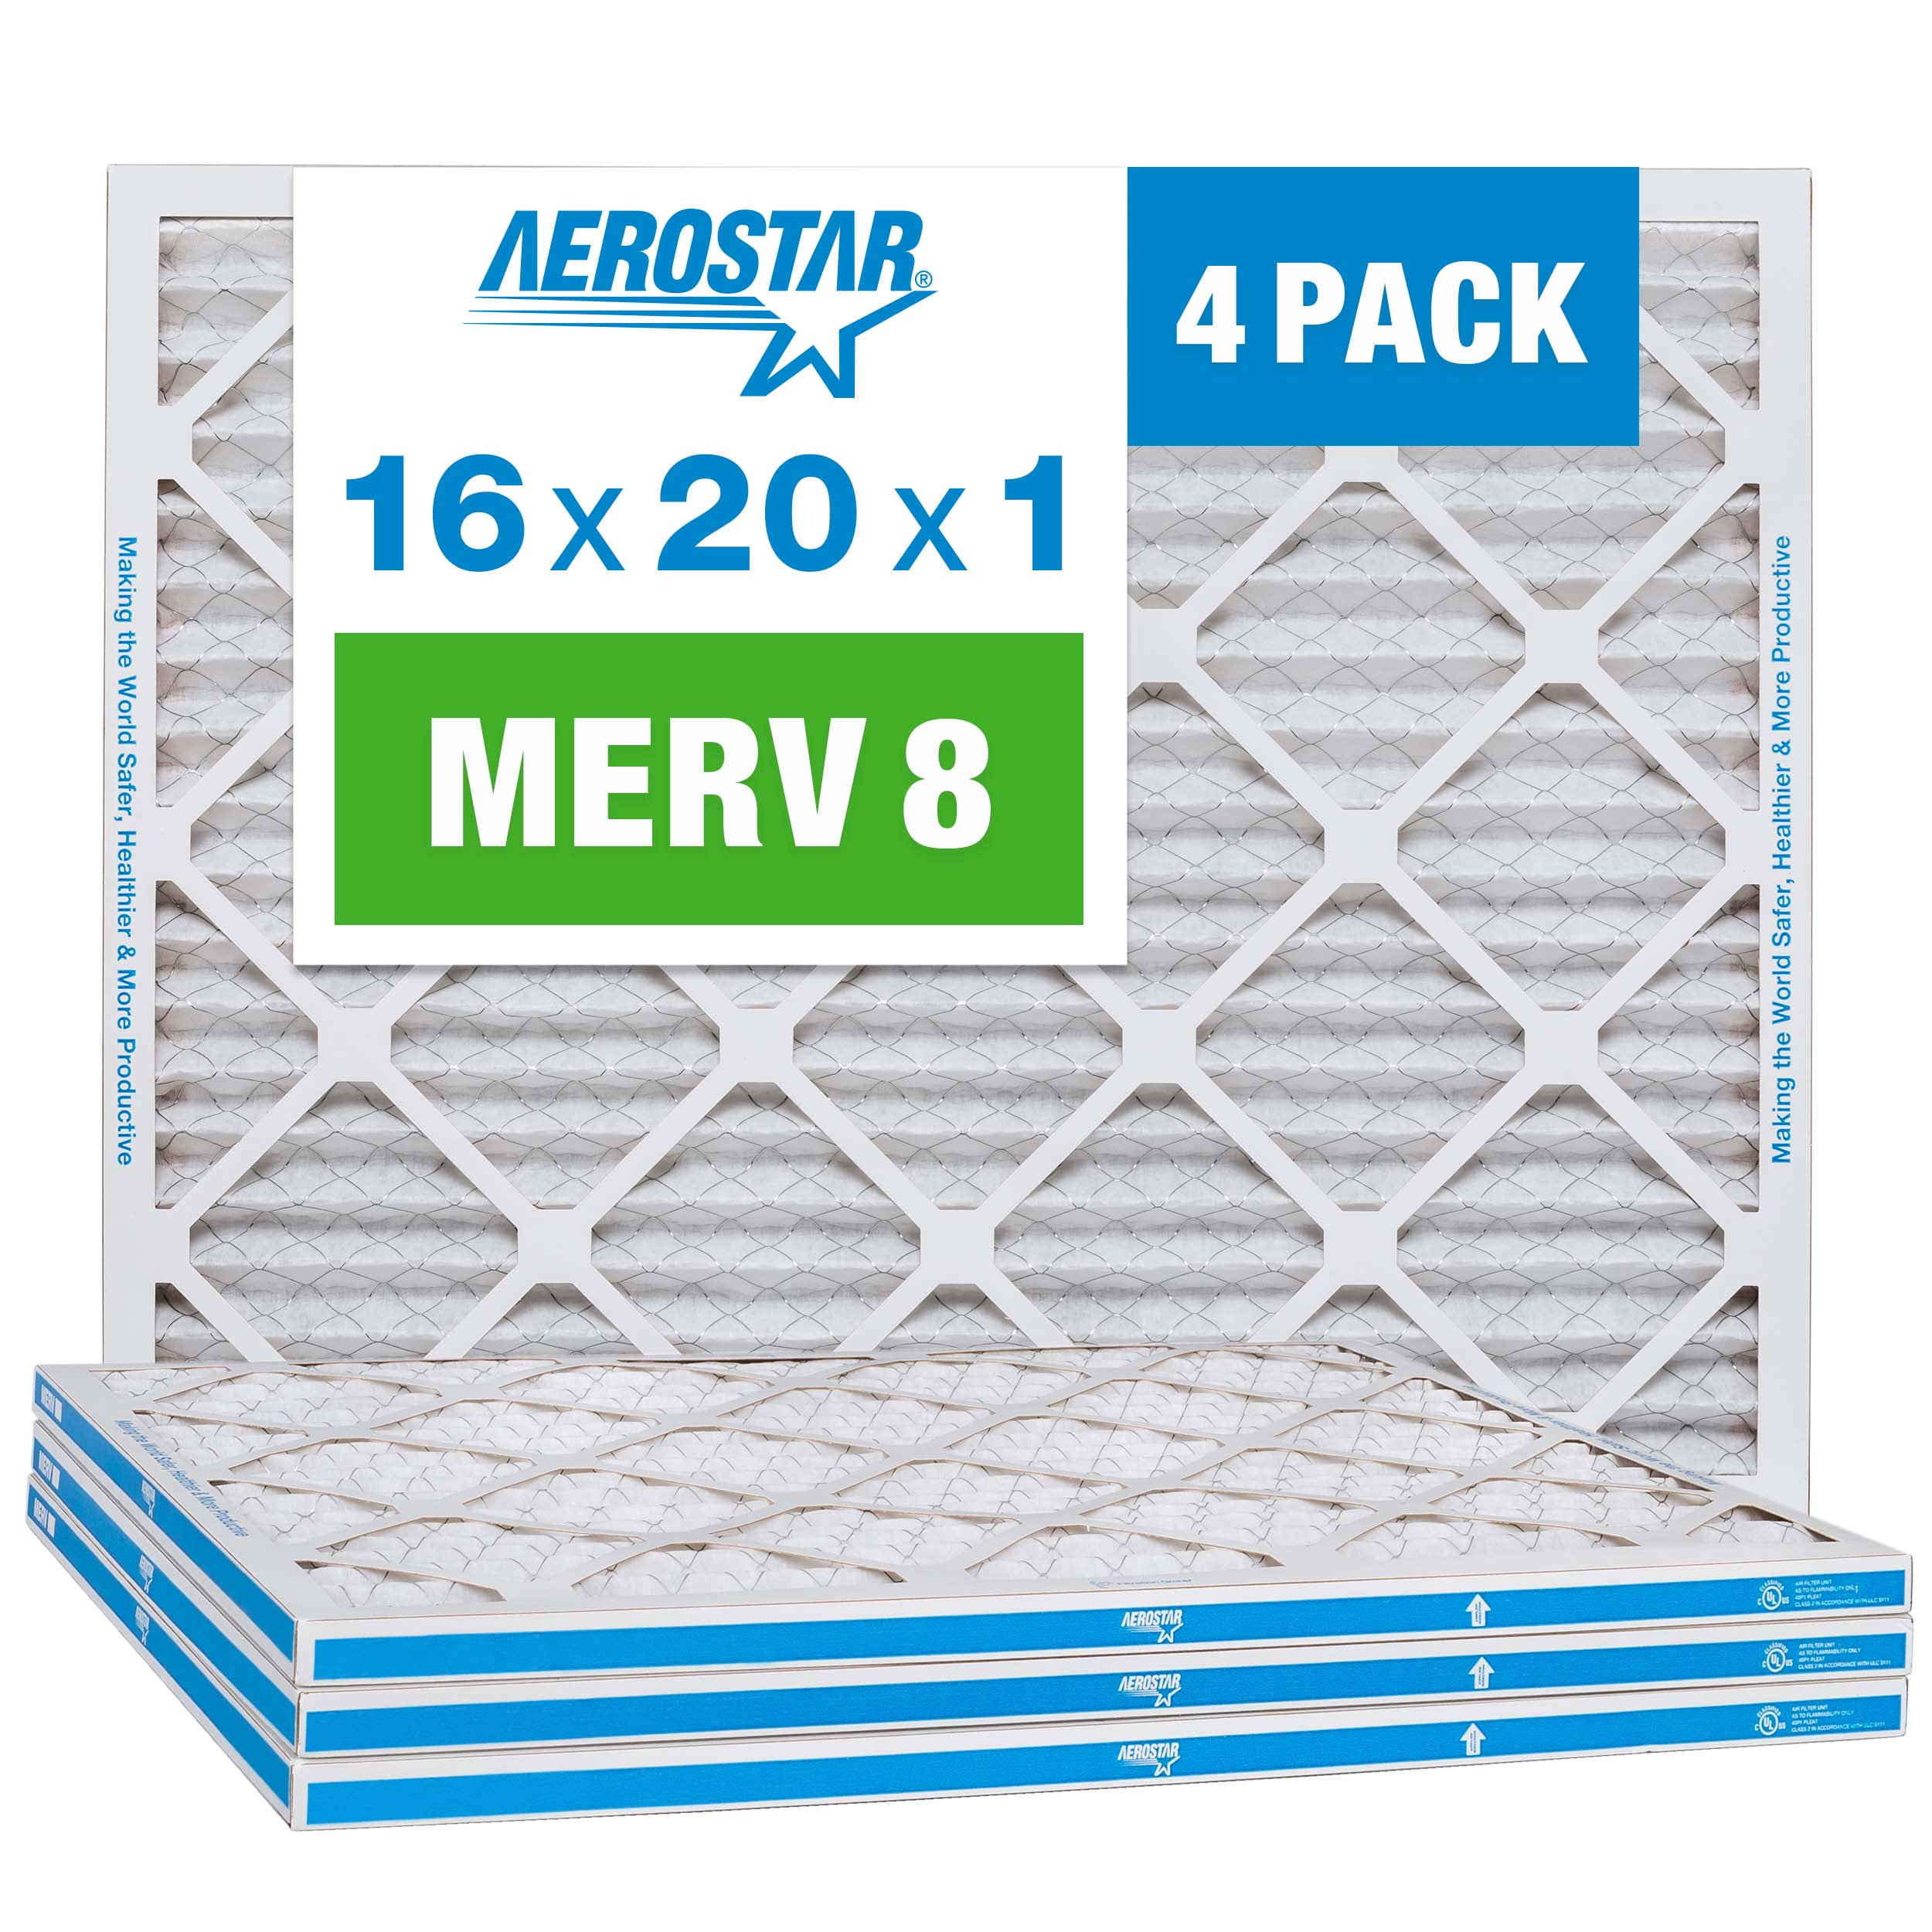 15 x 20 x 1 6pk AF MERV 11 Pleated AC Furnace Air Filter.